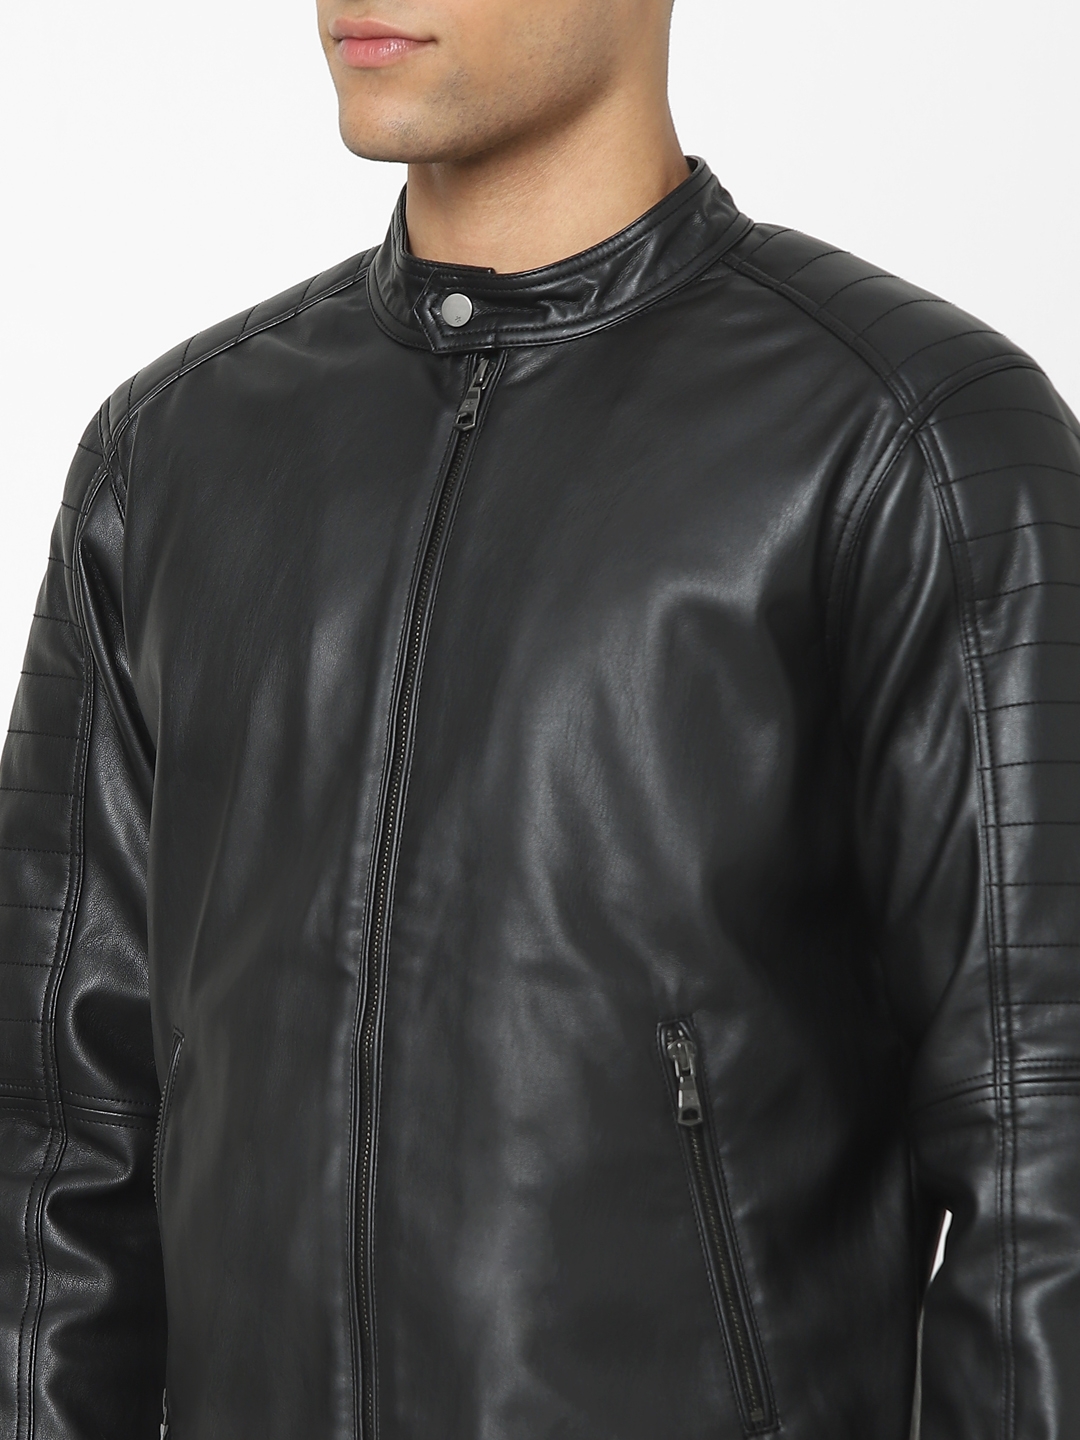 Men's Black Solid Leather Jackets